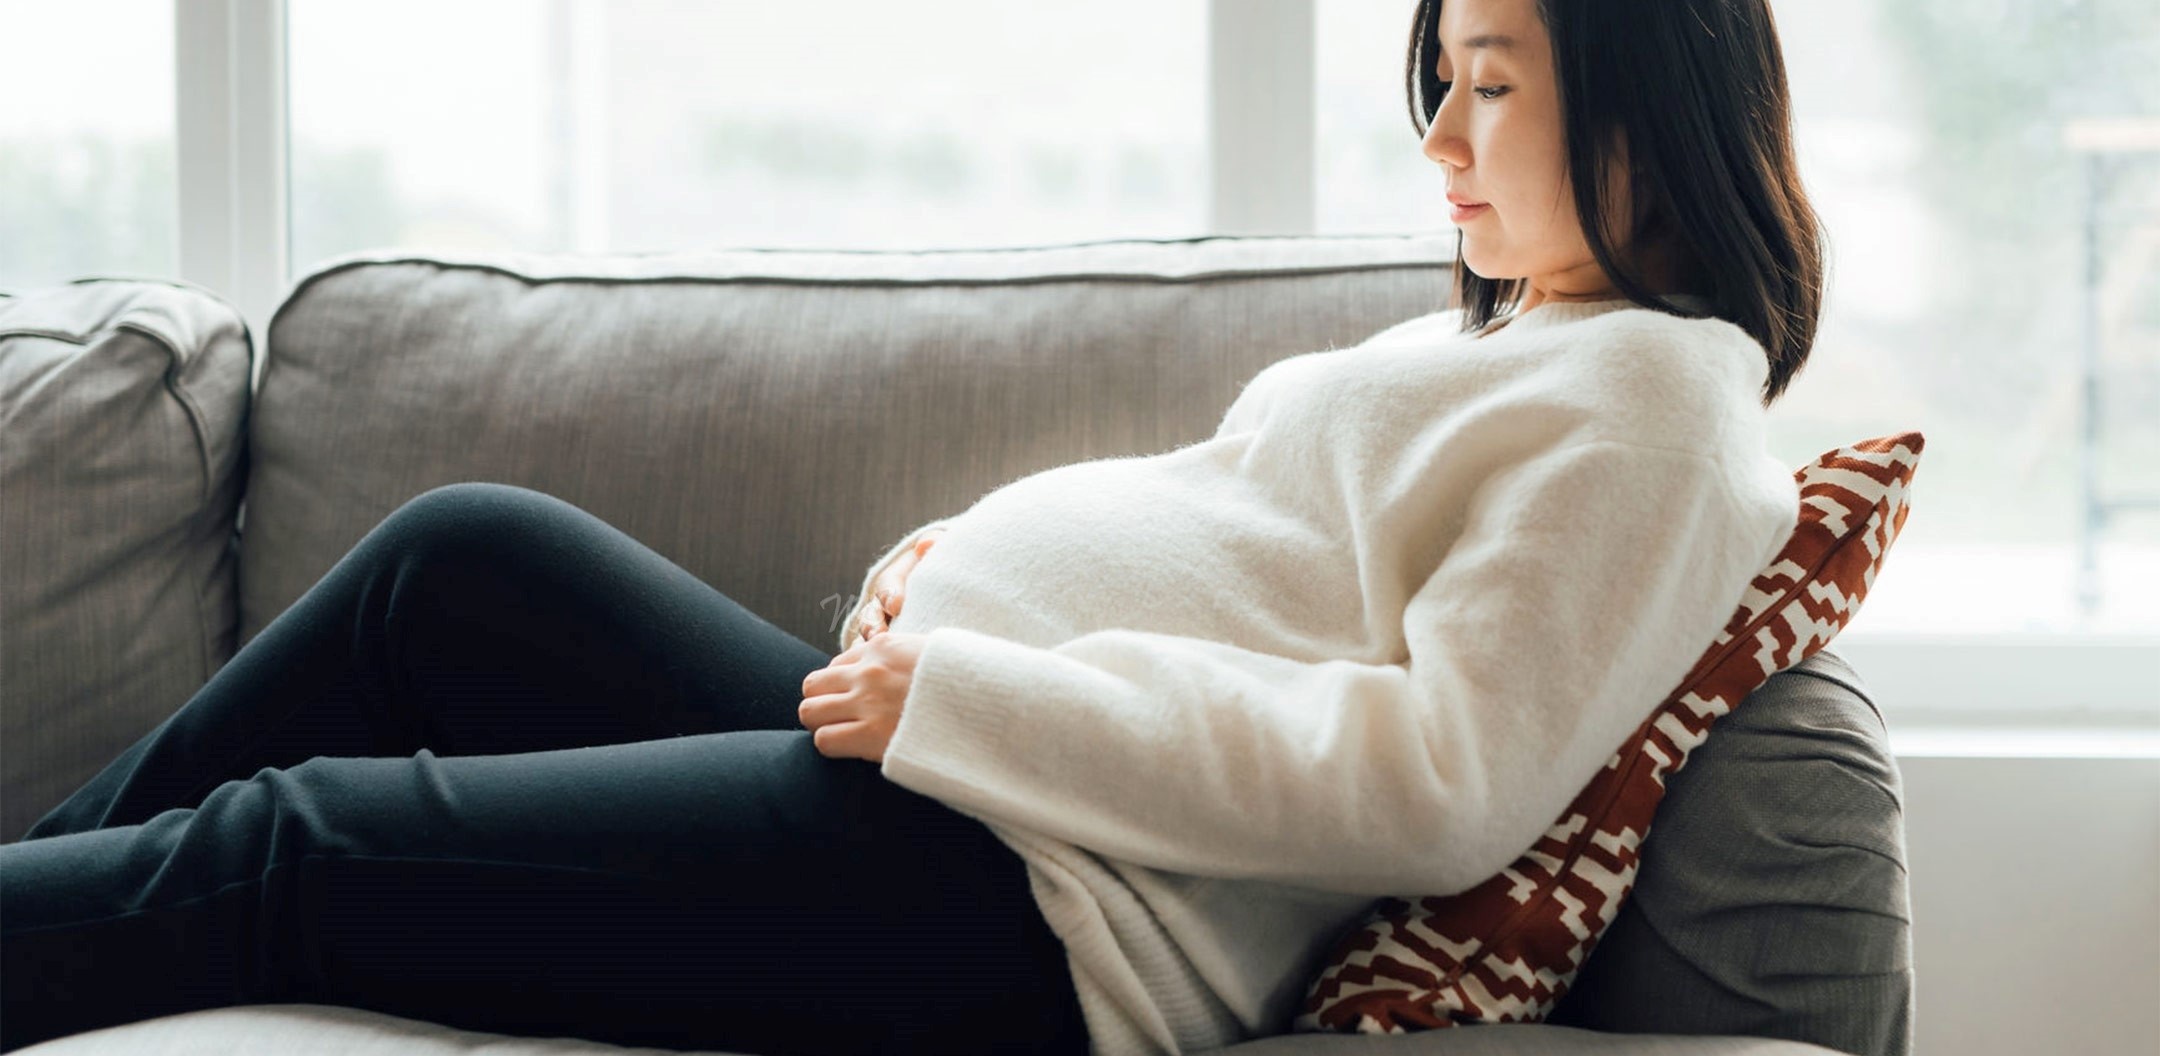 Symptoms of Period During Pregnancy